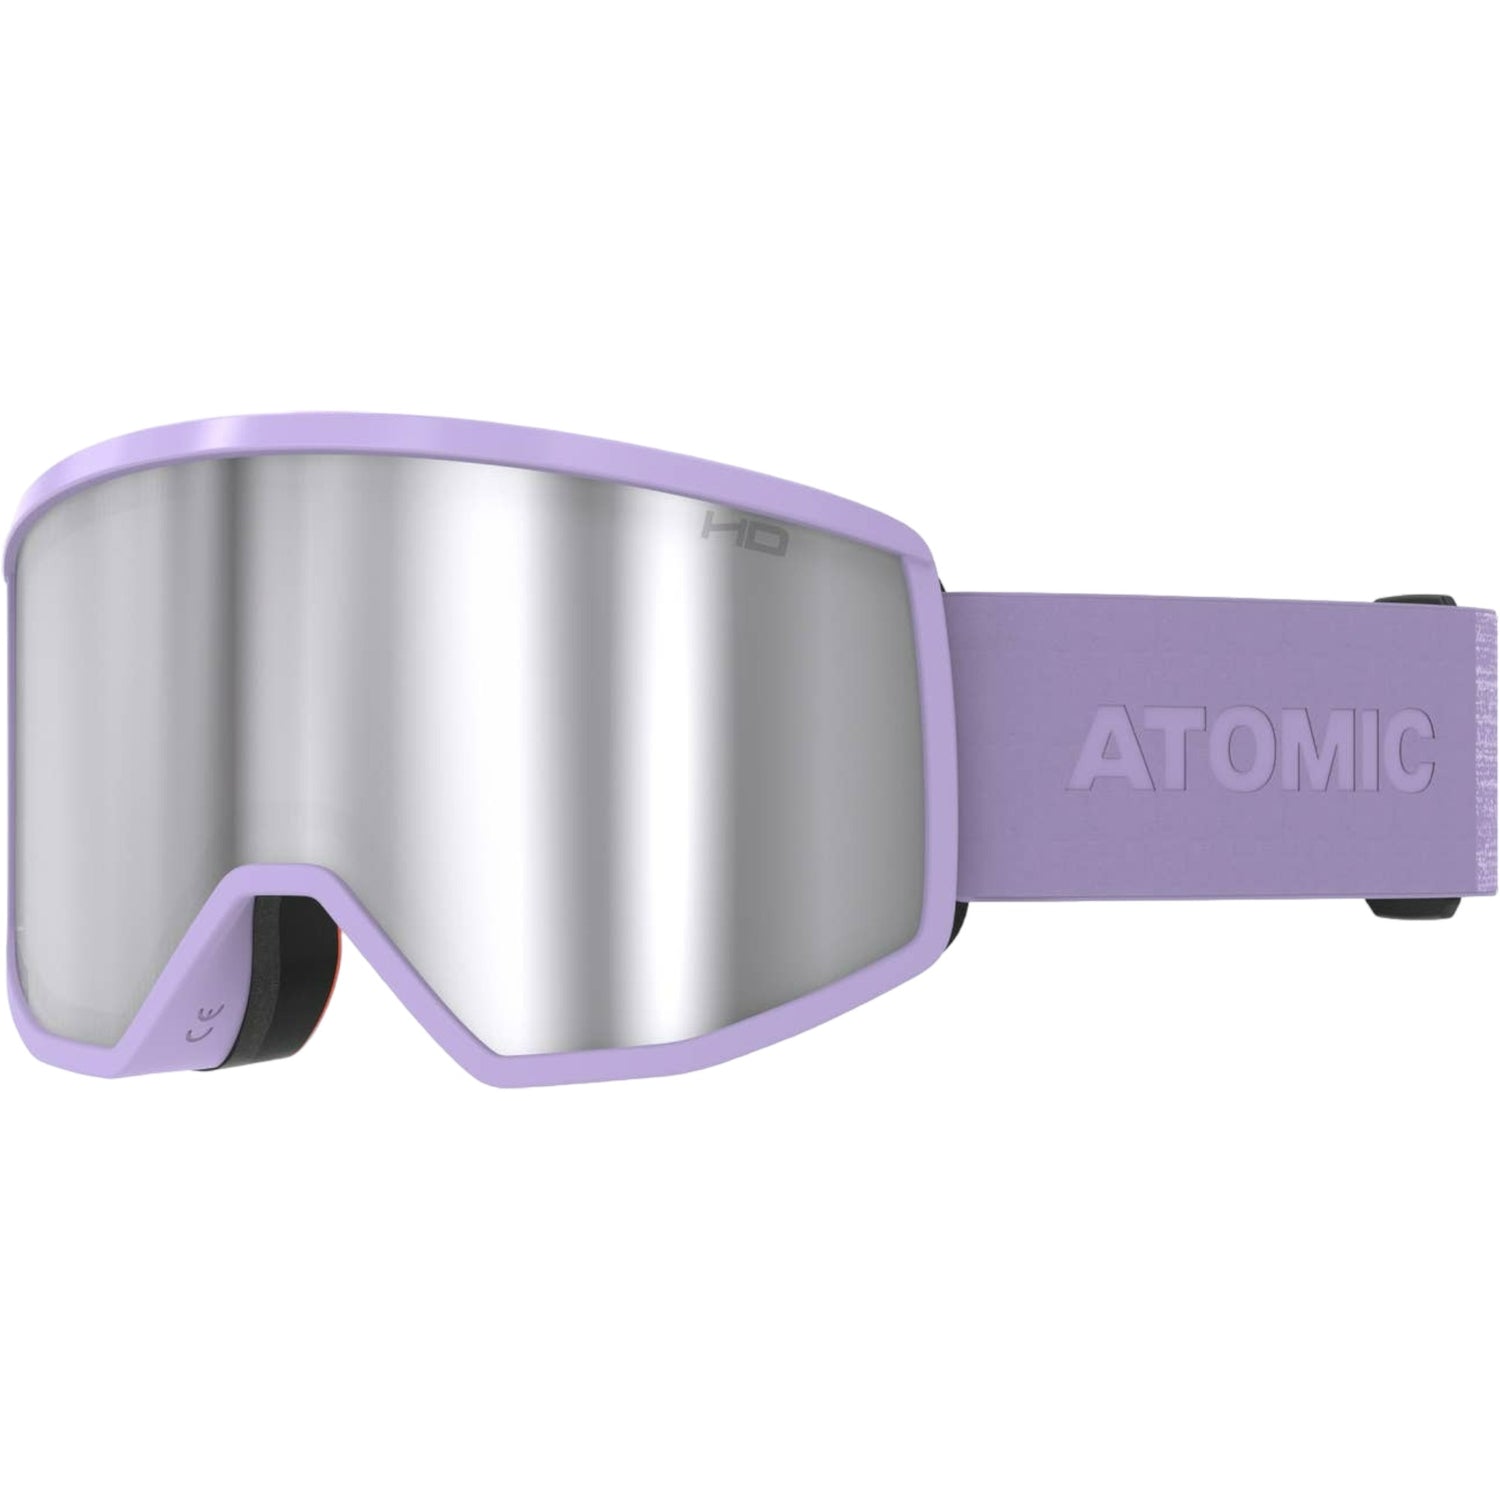 Four HD Adult Ski Goggles